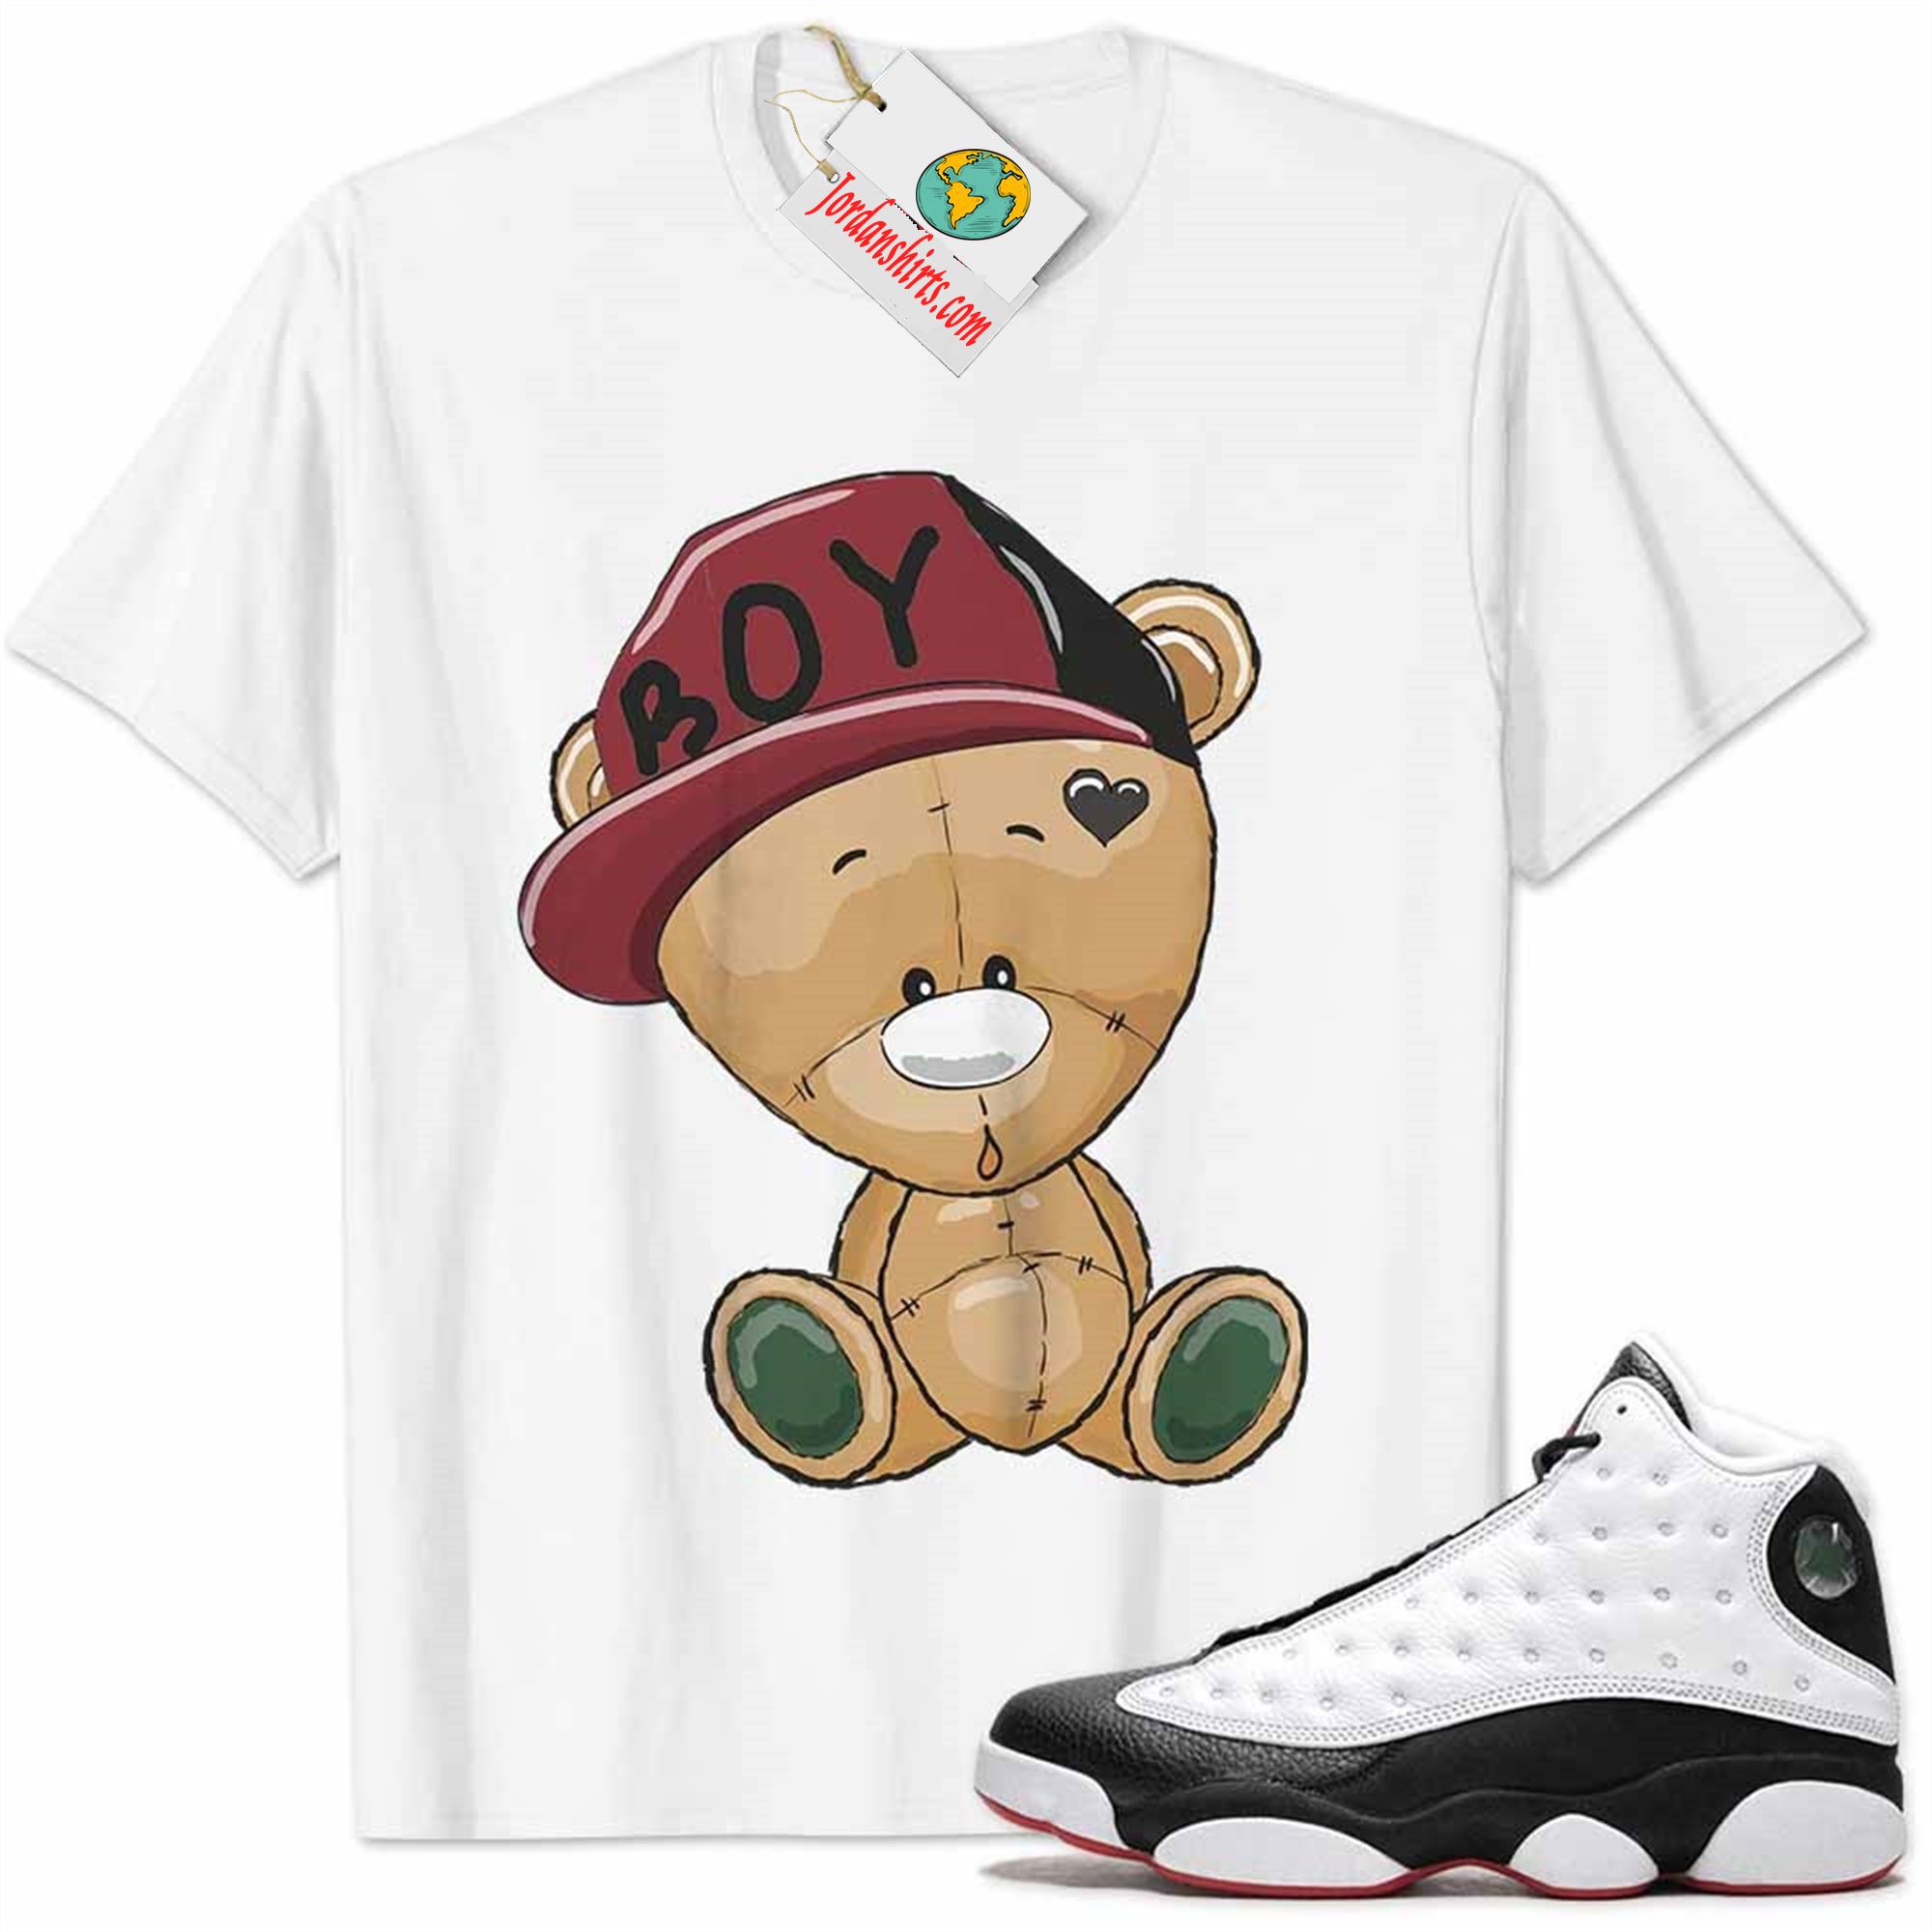 Jordan 13 Shirt, Jordan 13 He Got Game Shirt Cute Baby Teddy Bear White Size Up To 5xl